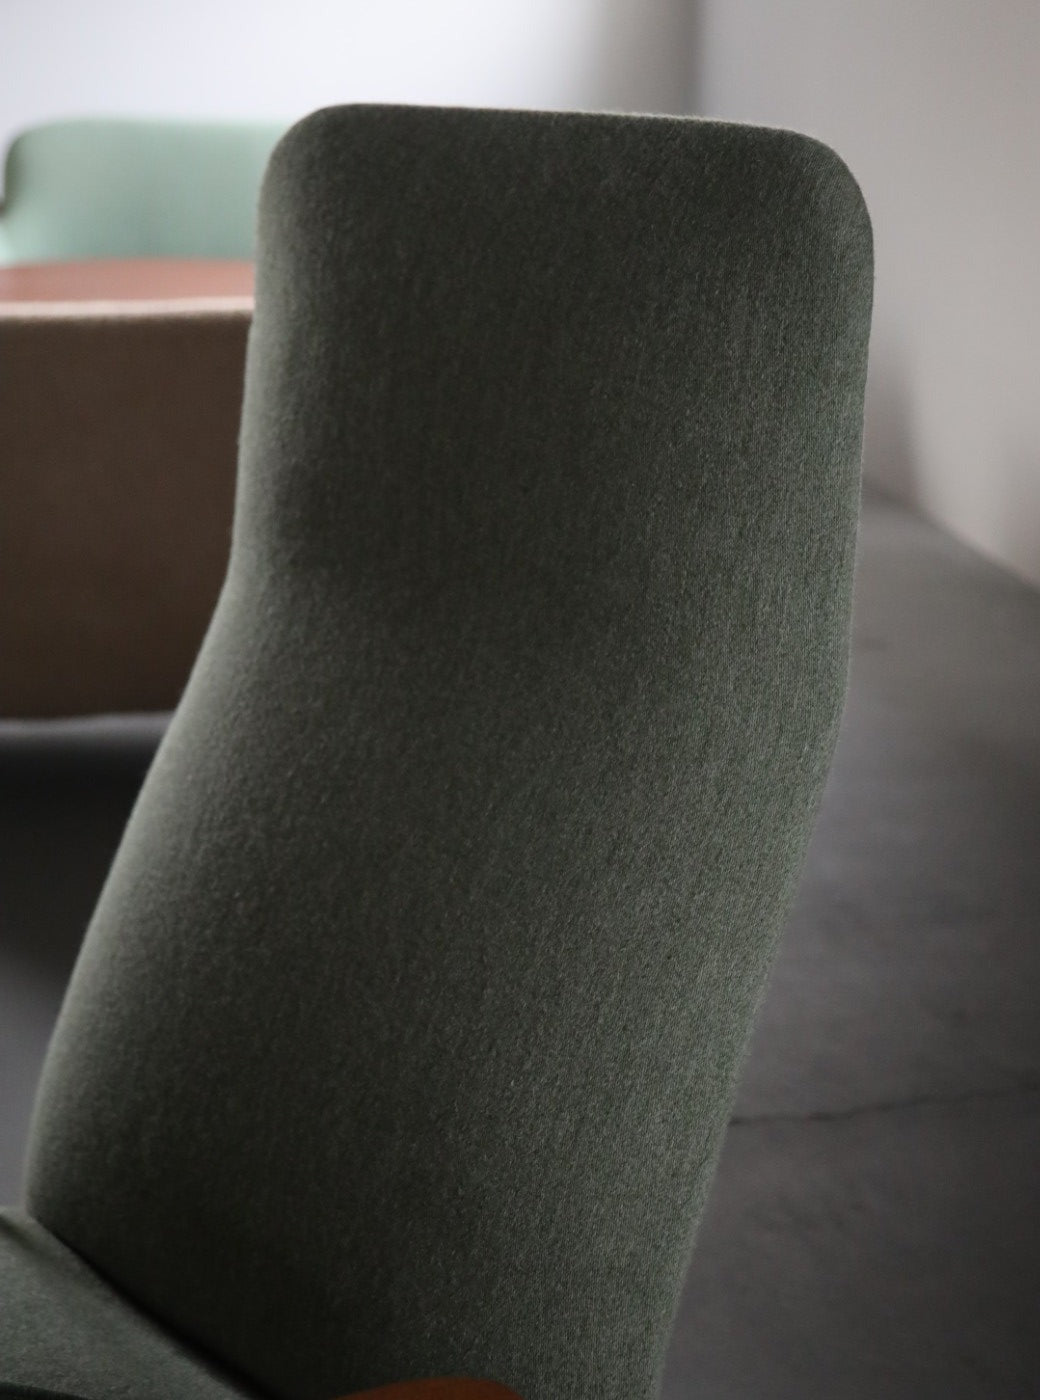 Contour adjustable high back lounge chair by Alf Svensson